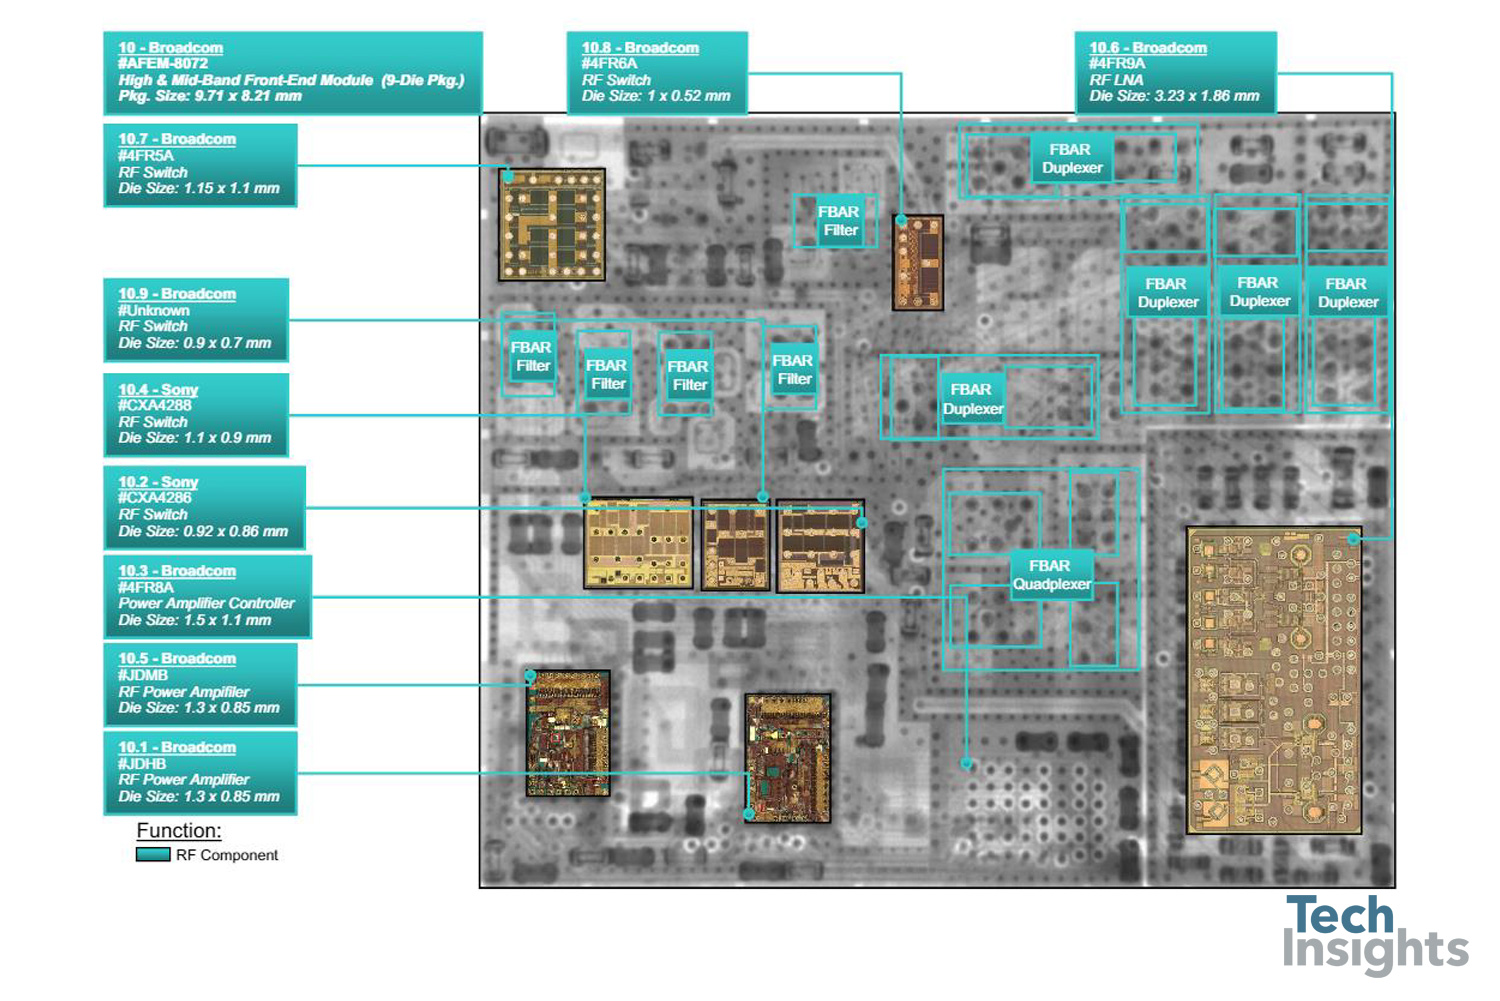 The Broadcom/Avago AFEM-8072 integrates multiple RF components